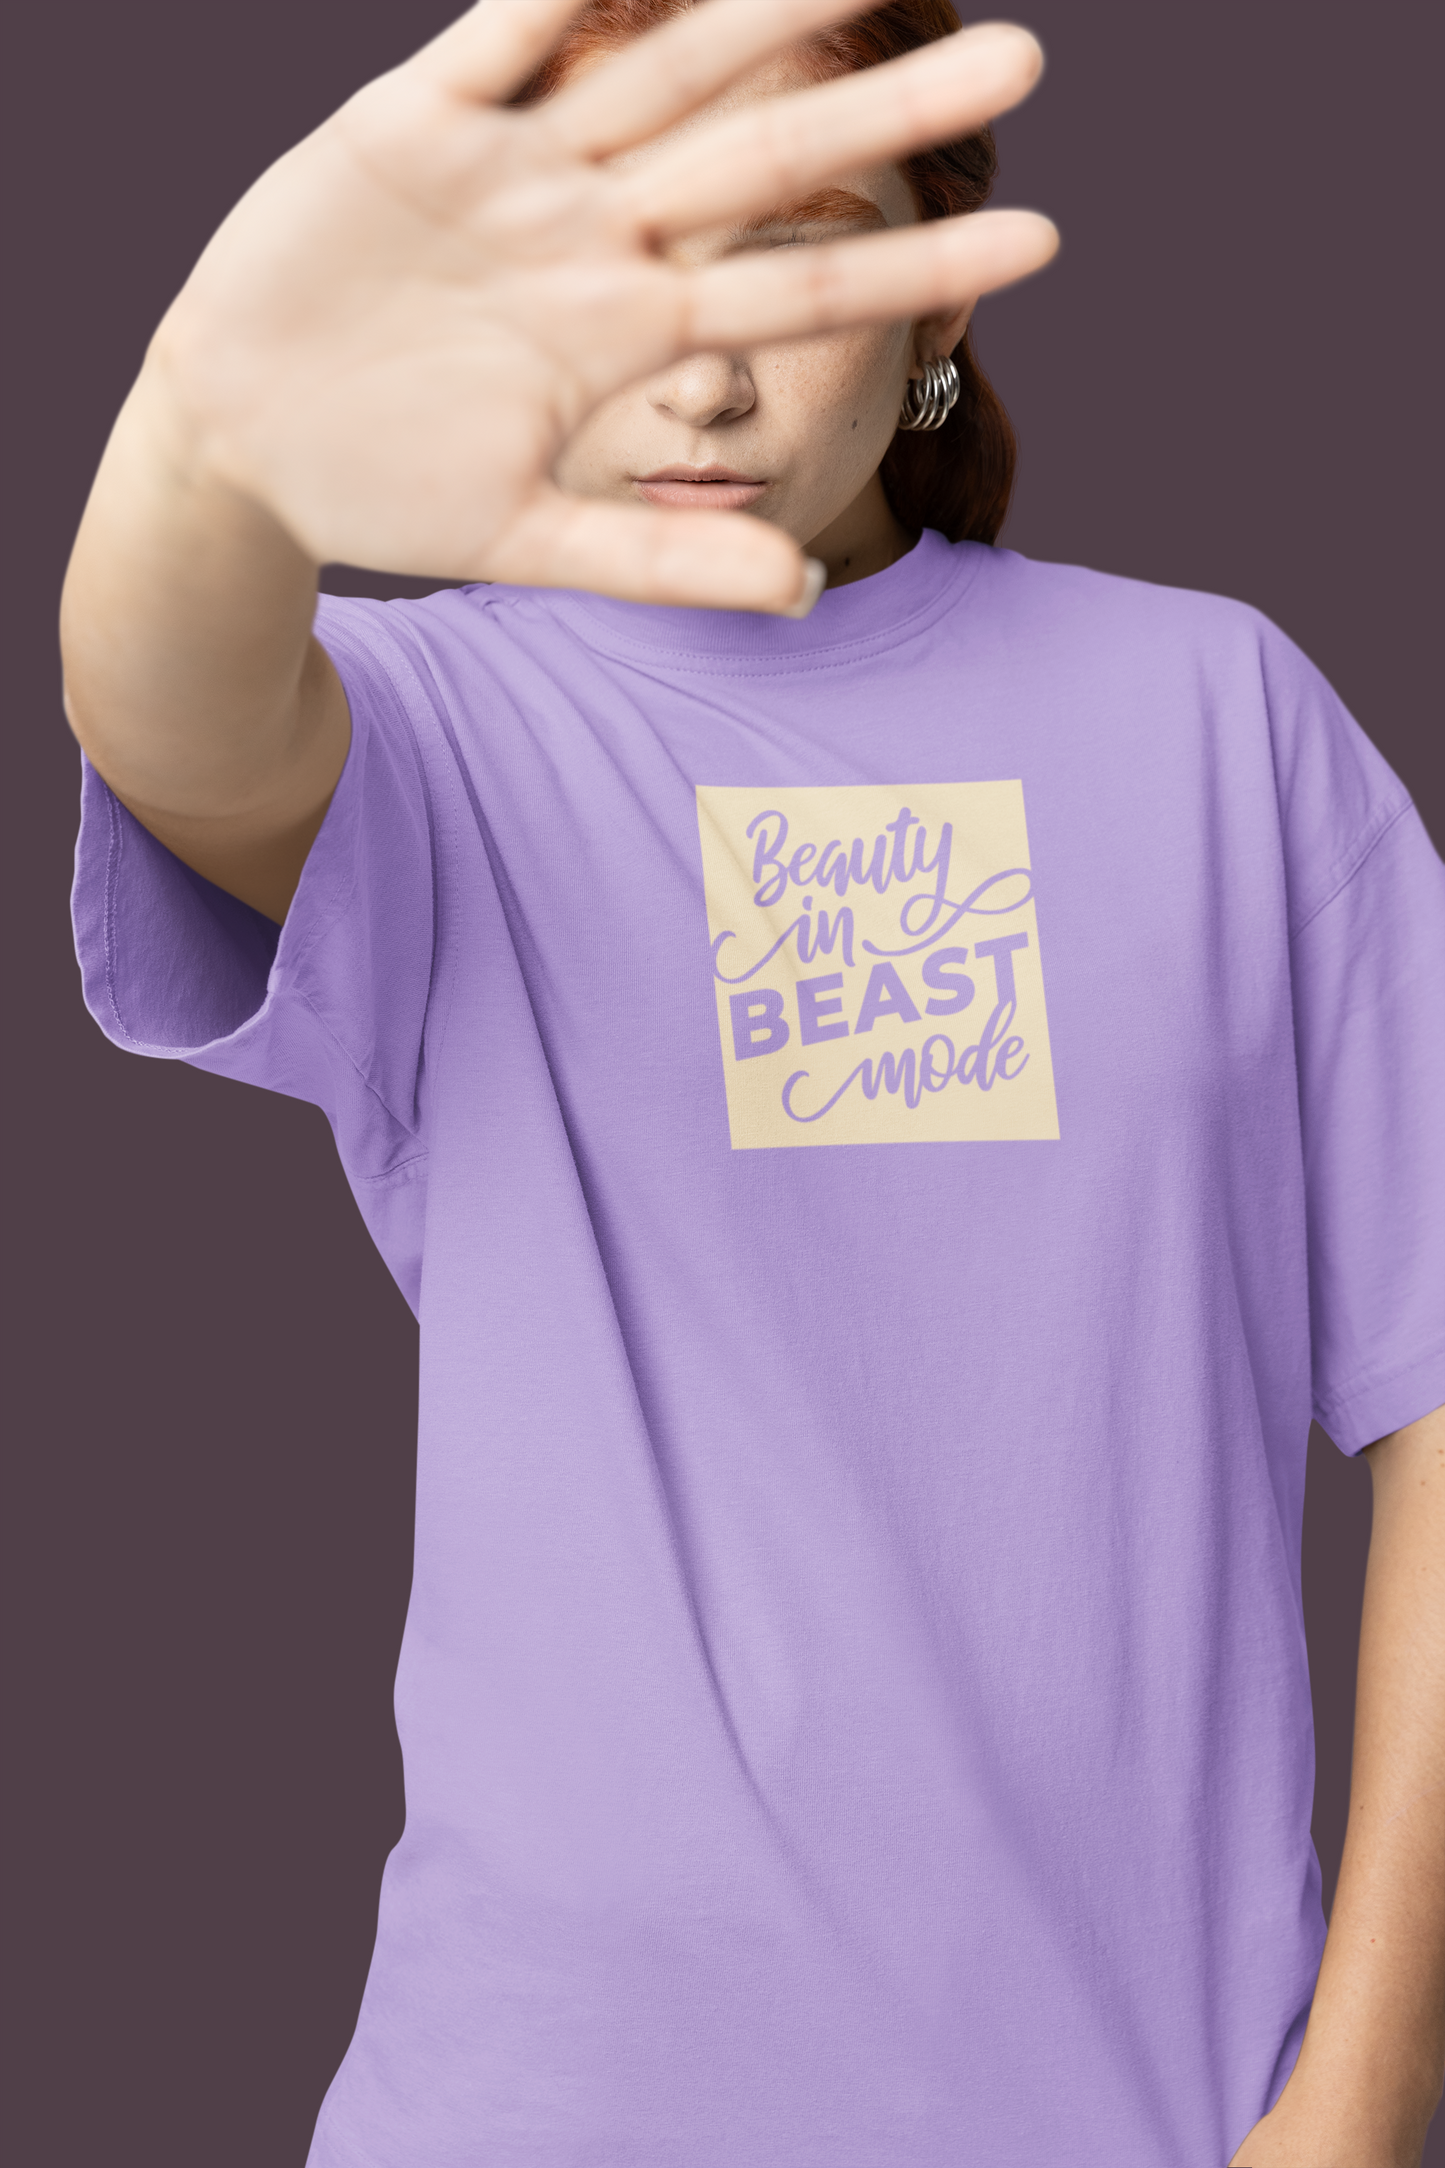 Bilkool Beauty in Beast Mode Oversized T-Shirt Design for Women